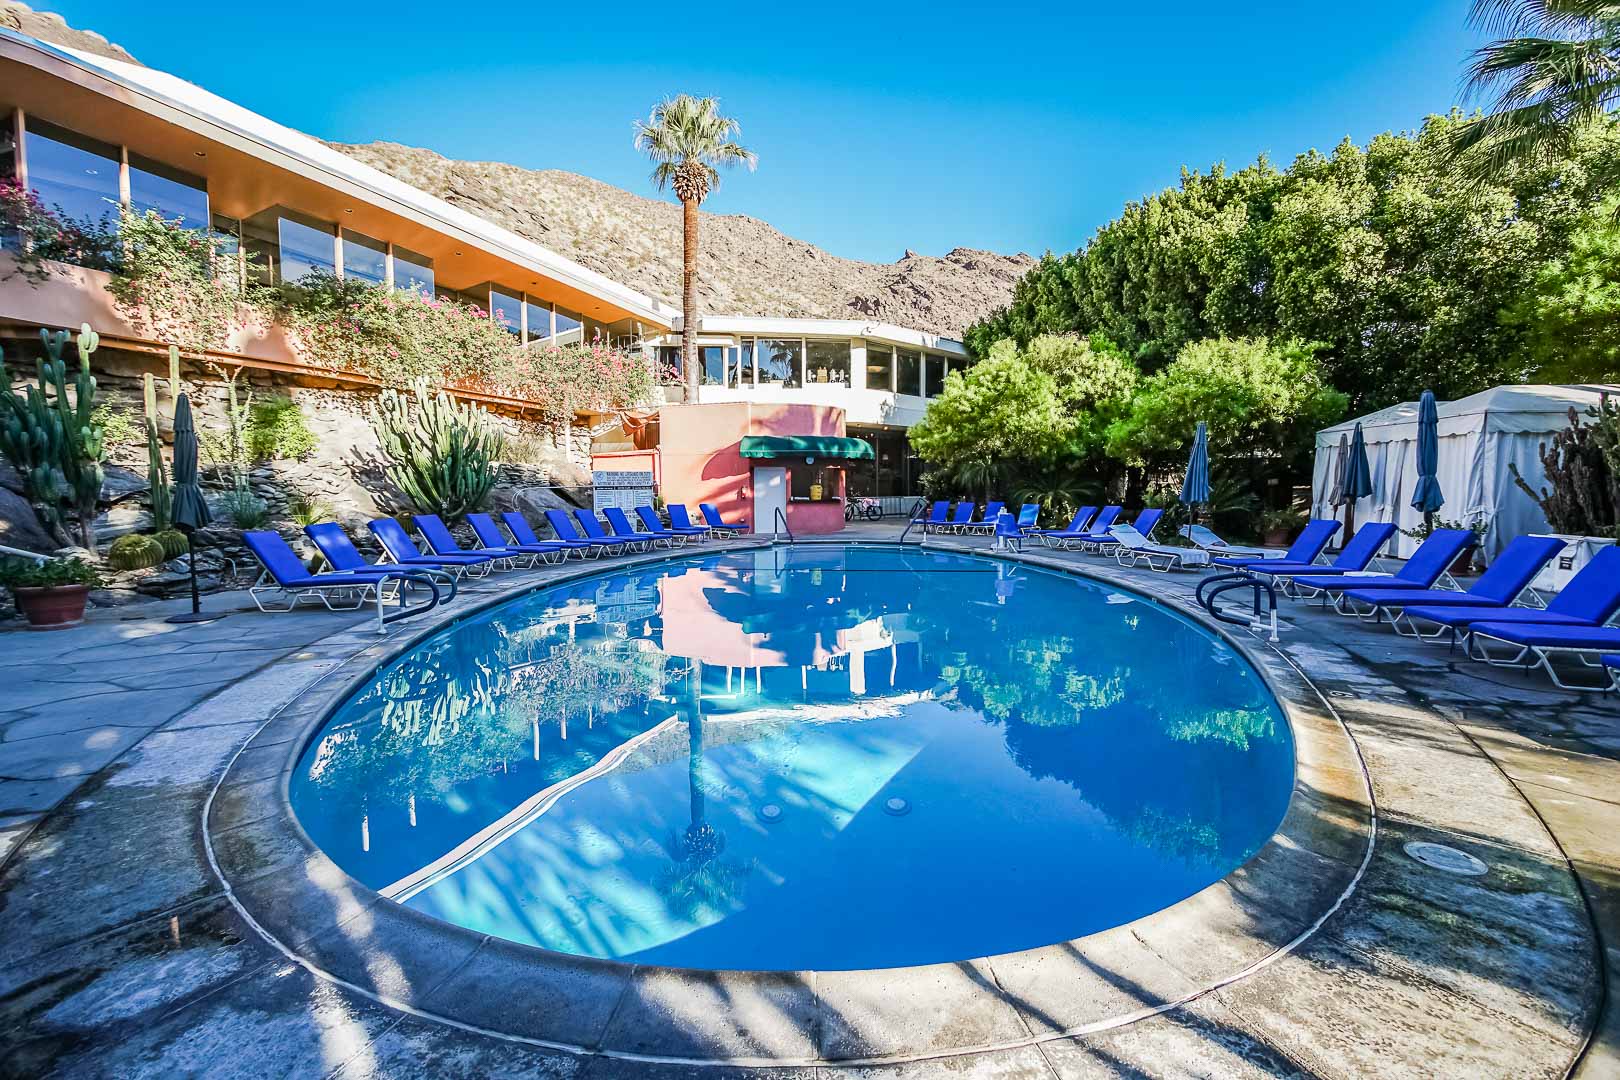 A crisp outdoor swimming pool at VRI's Palm Springs Tennis Club in California.